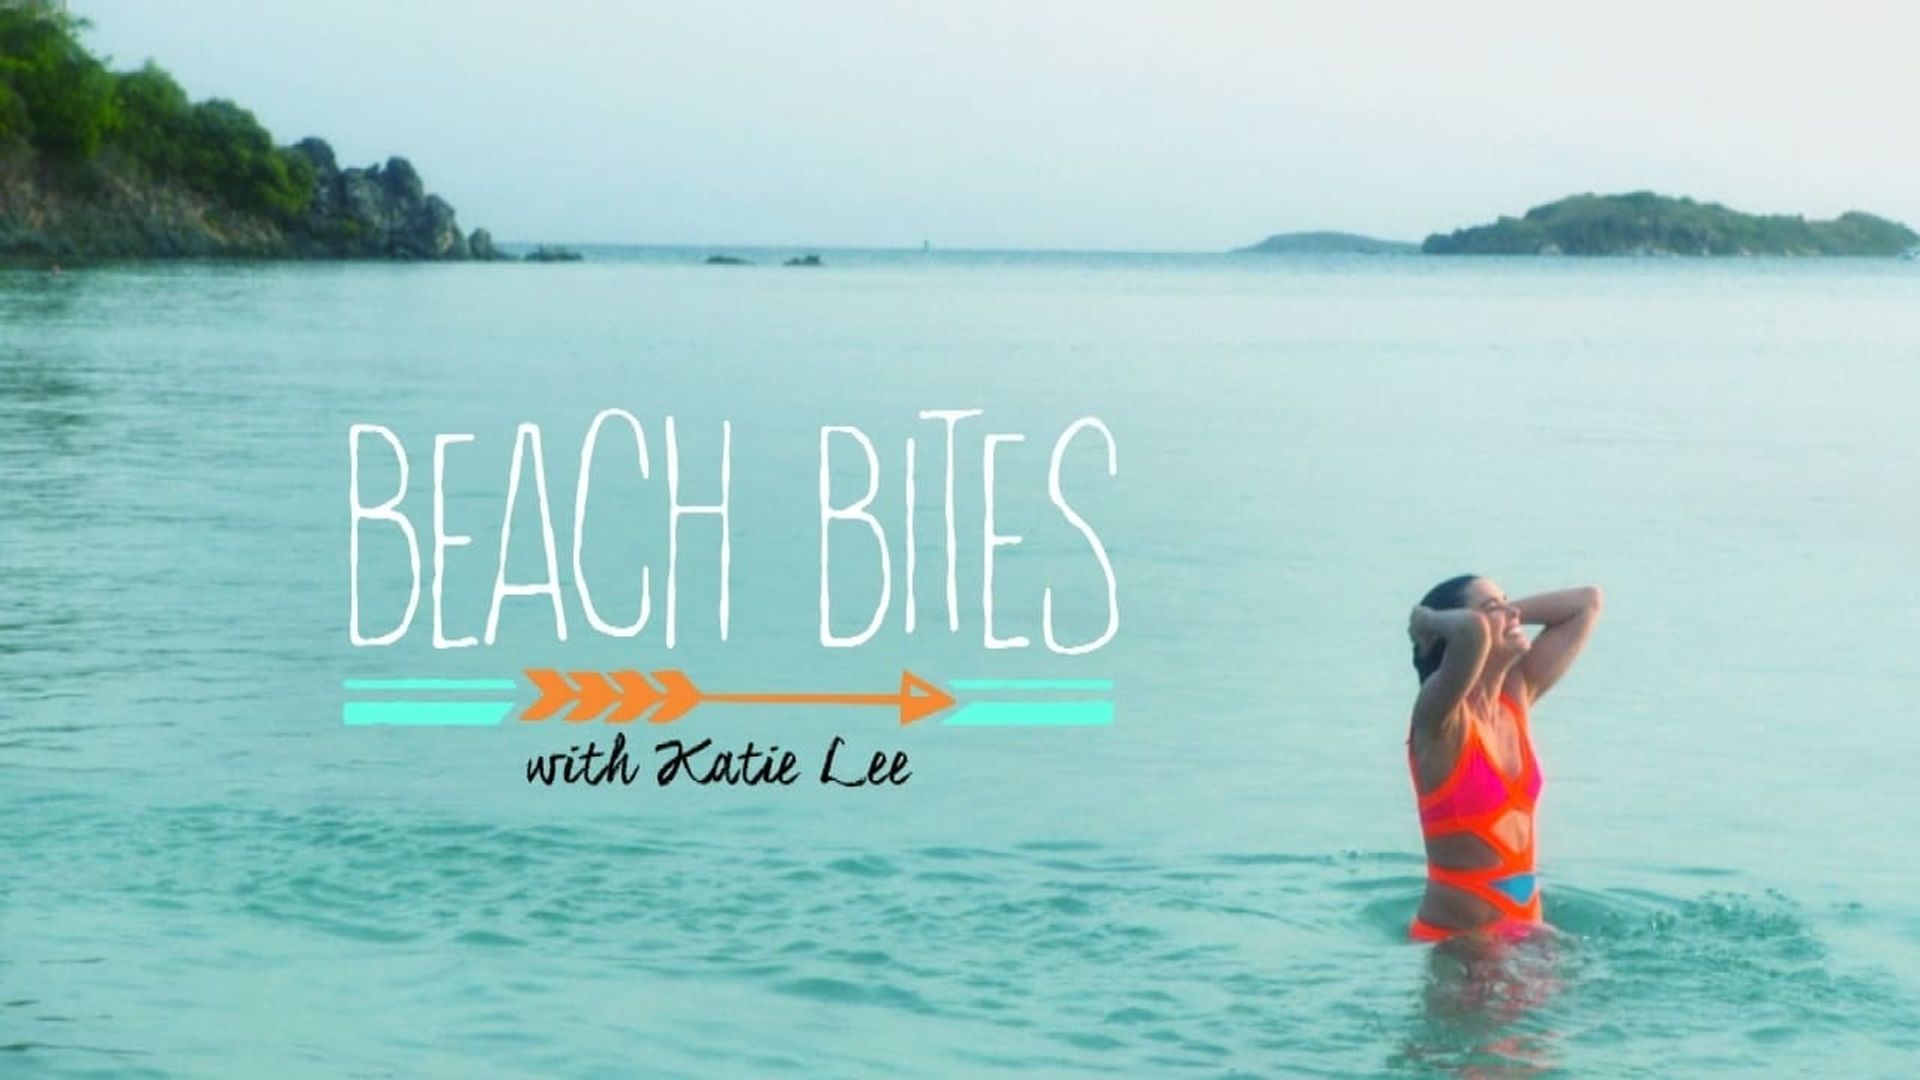 Beach Bites with Katie Lee Backdrop